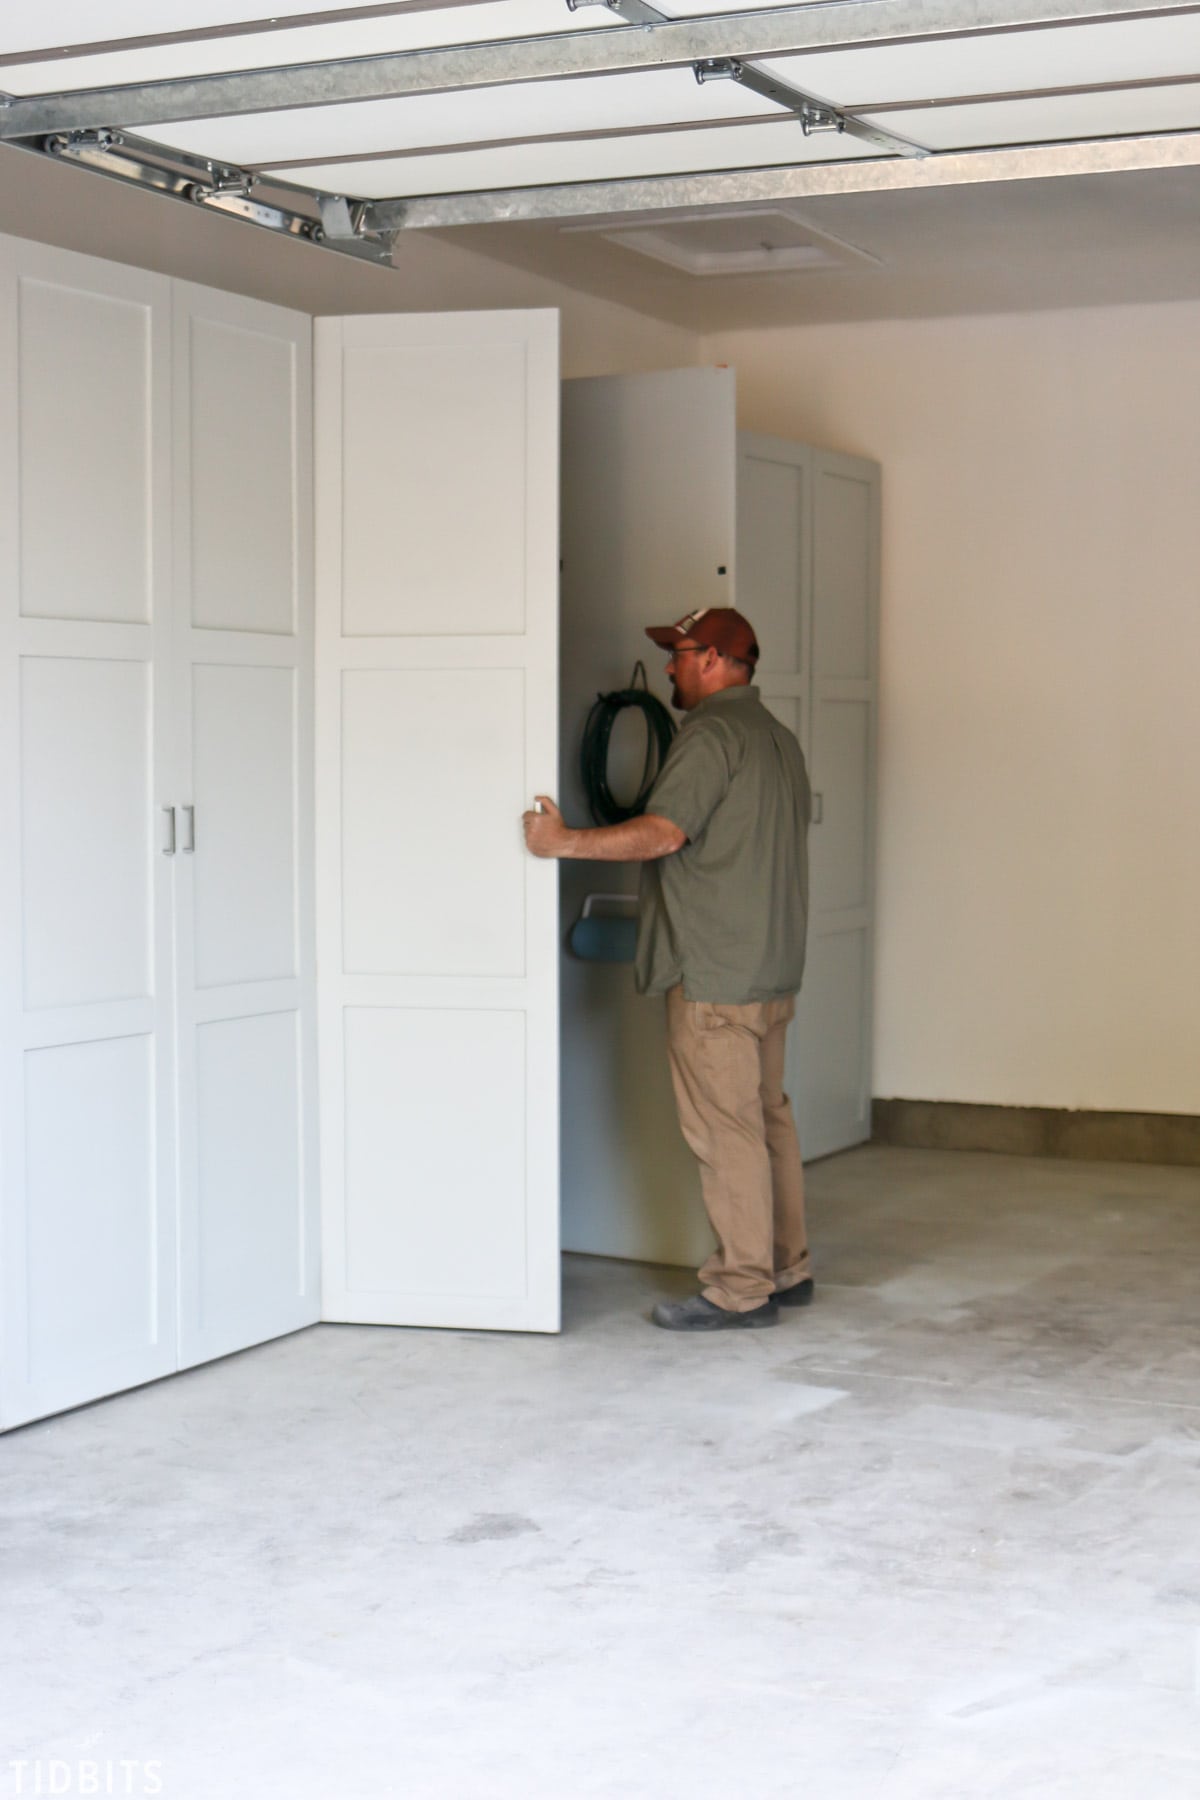 Garage Storage Cabinets Free Building, Built In Storage Cabinets For Garage Door